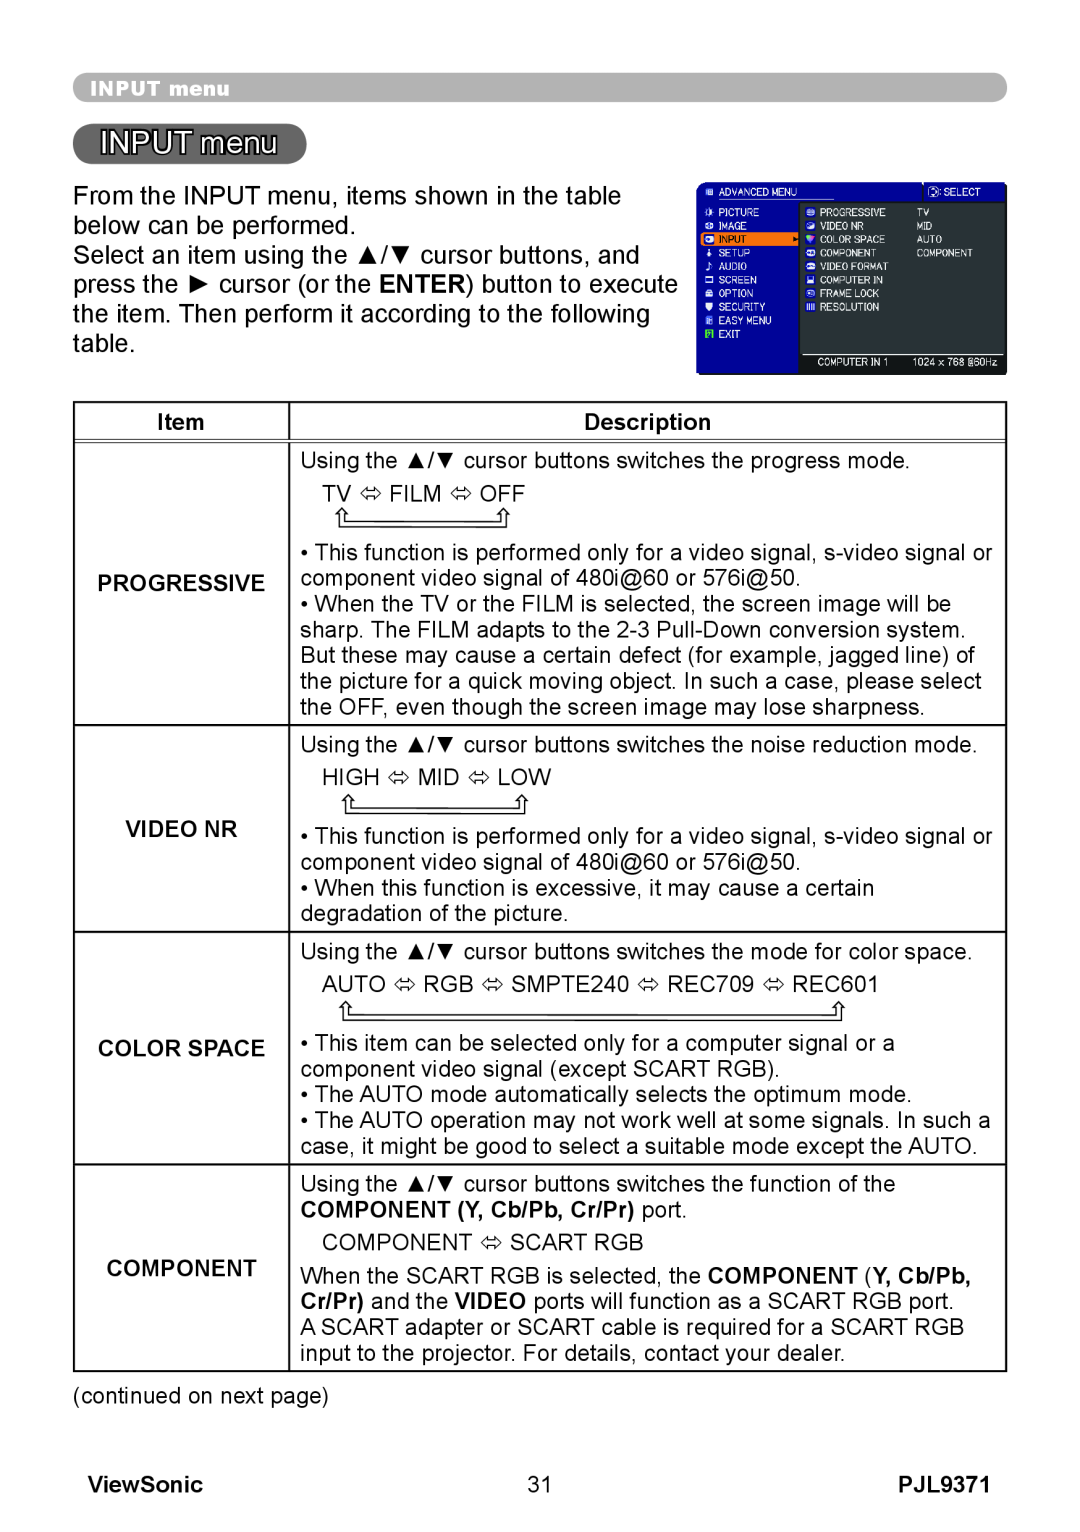 ViewSonic pjl9371 manual INPUTmenu, Description, Progressive, Video Nr, Color Space, ViewSonic 